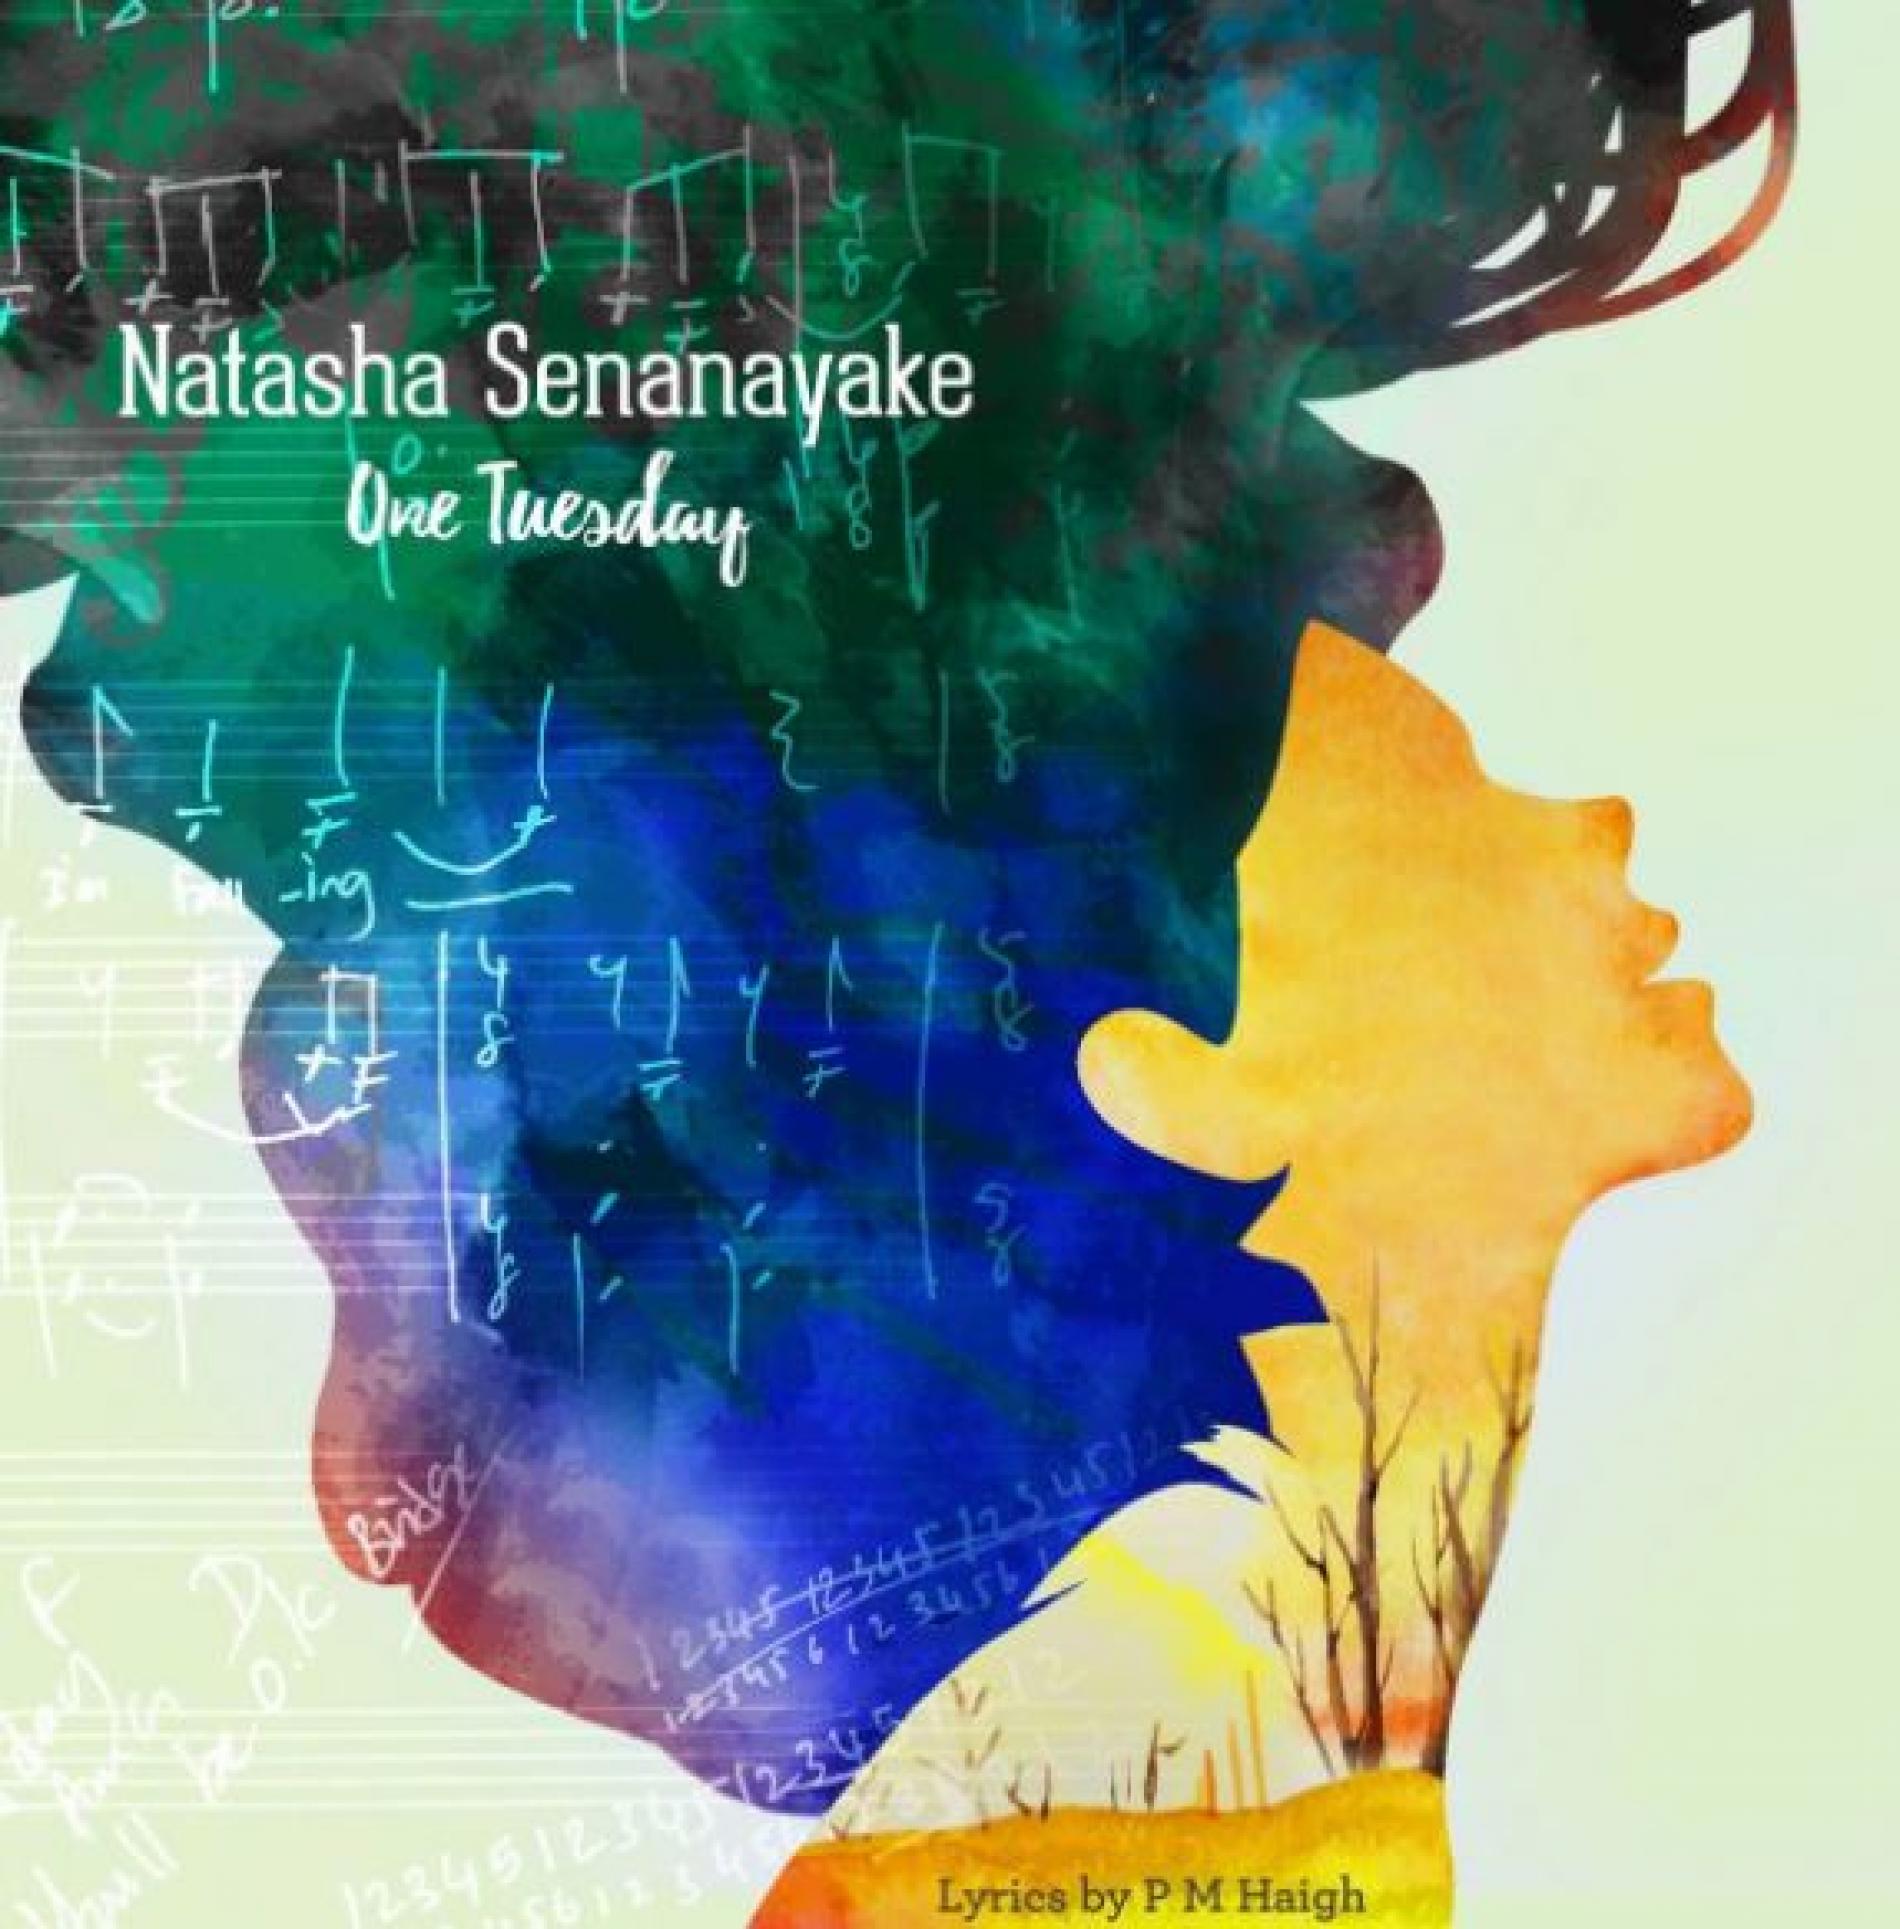 Natasha Senanayaka’s Ep ‘One Tuesday’ Is Now Online